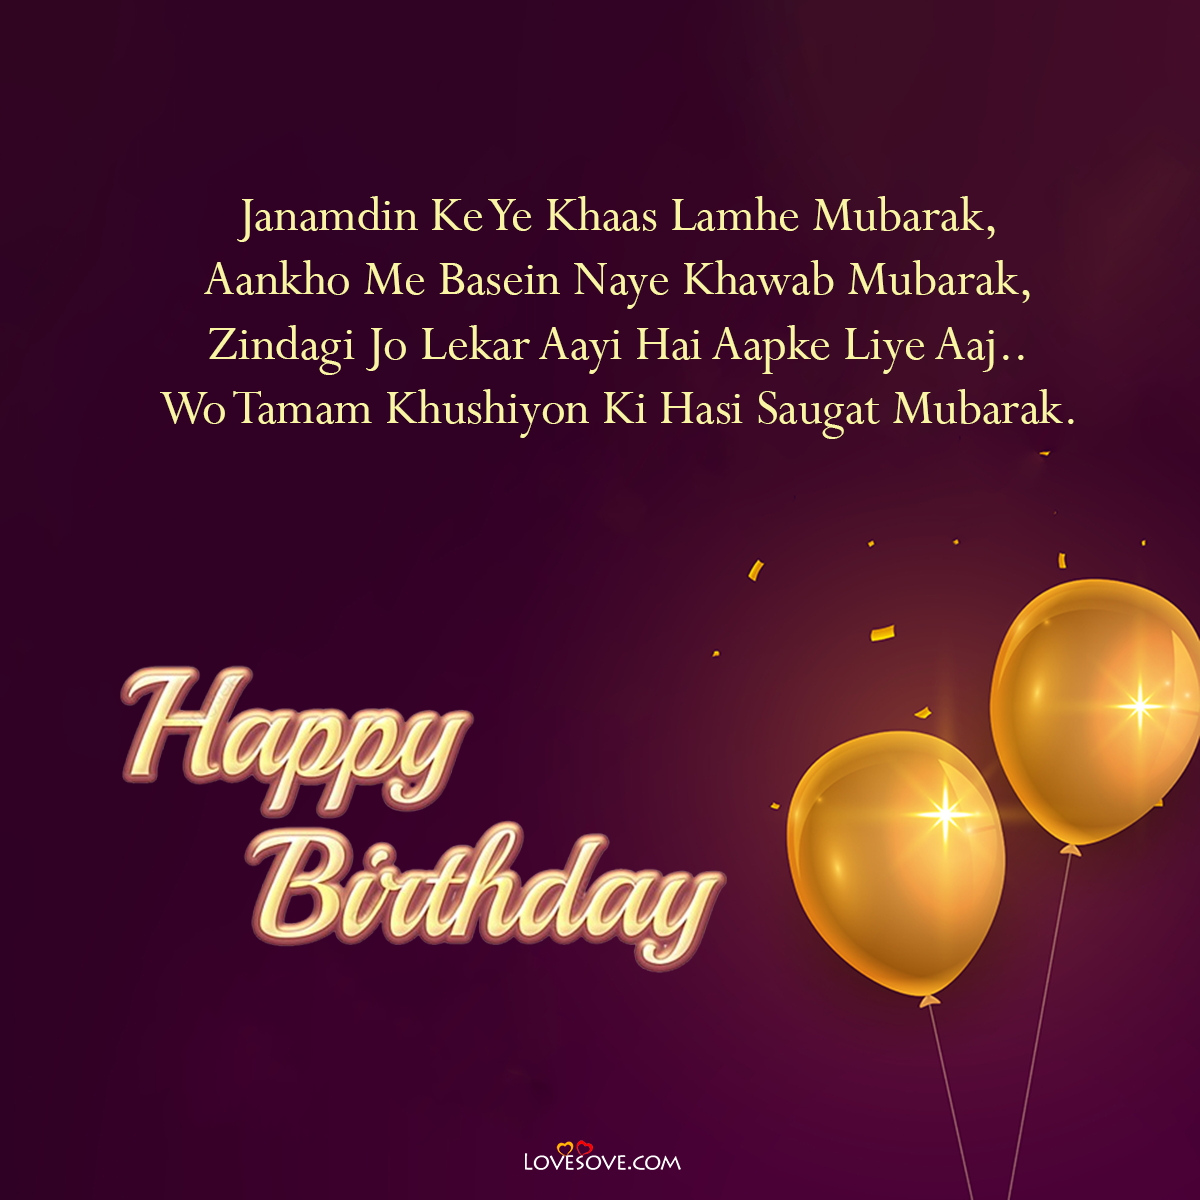 happy birthday wishses images hindi lovesove 6, birthday wishes